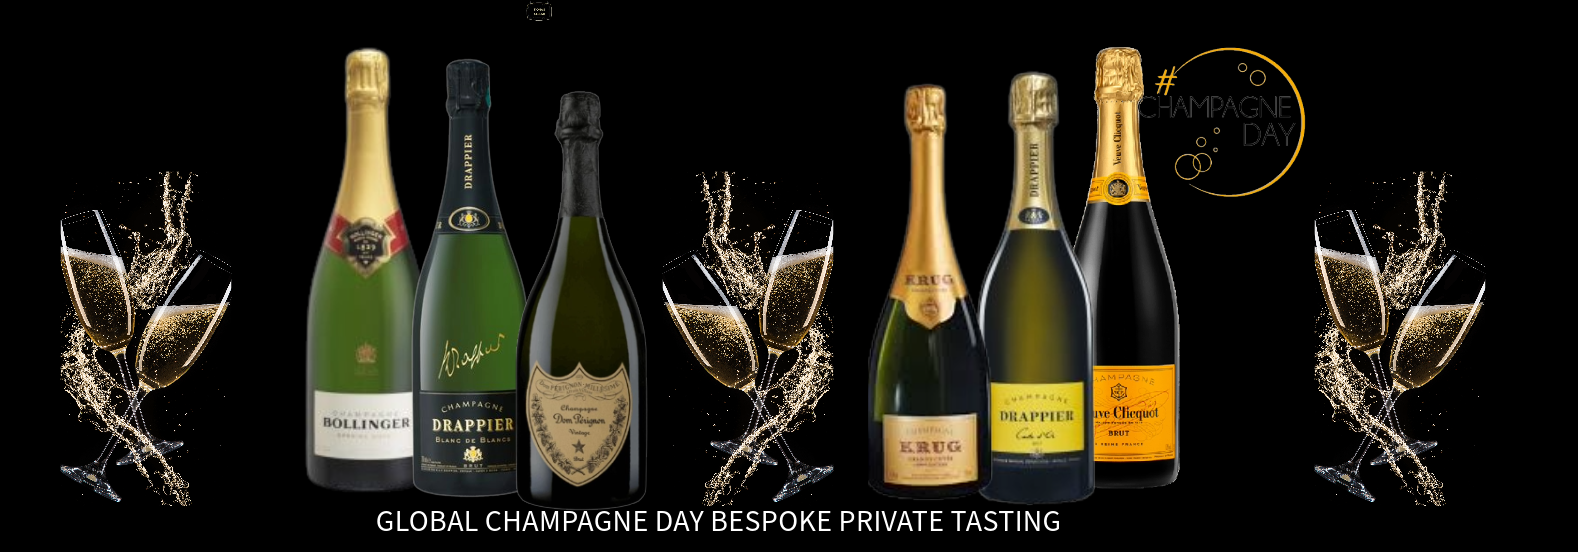 Global Champagne Day Bespoke Tasting Event